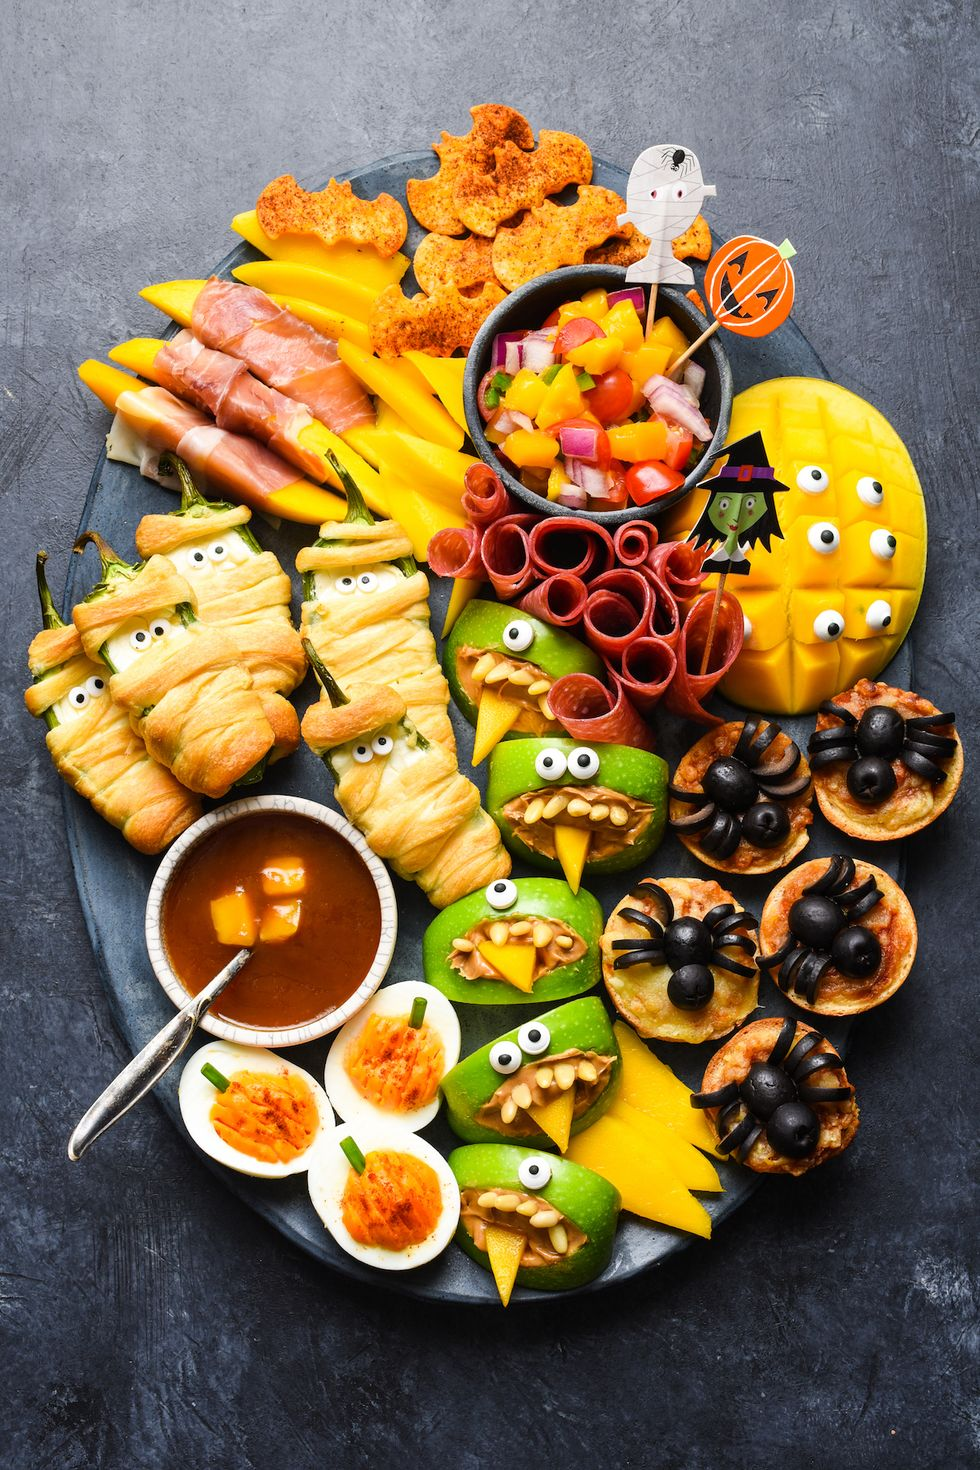 Halloween Party Foods Ideas